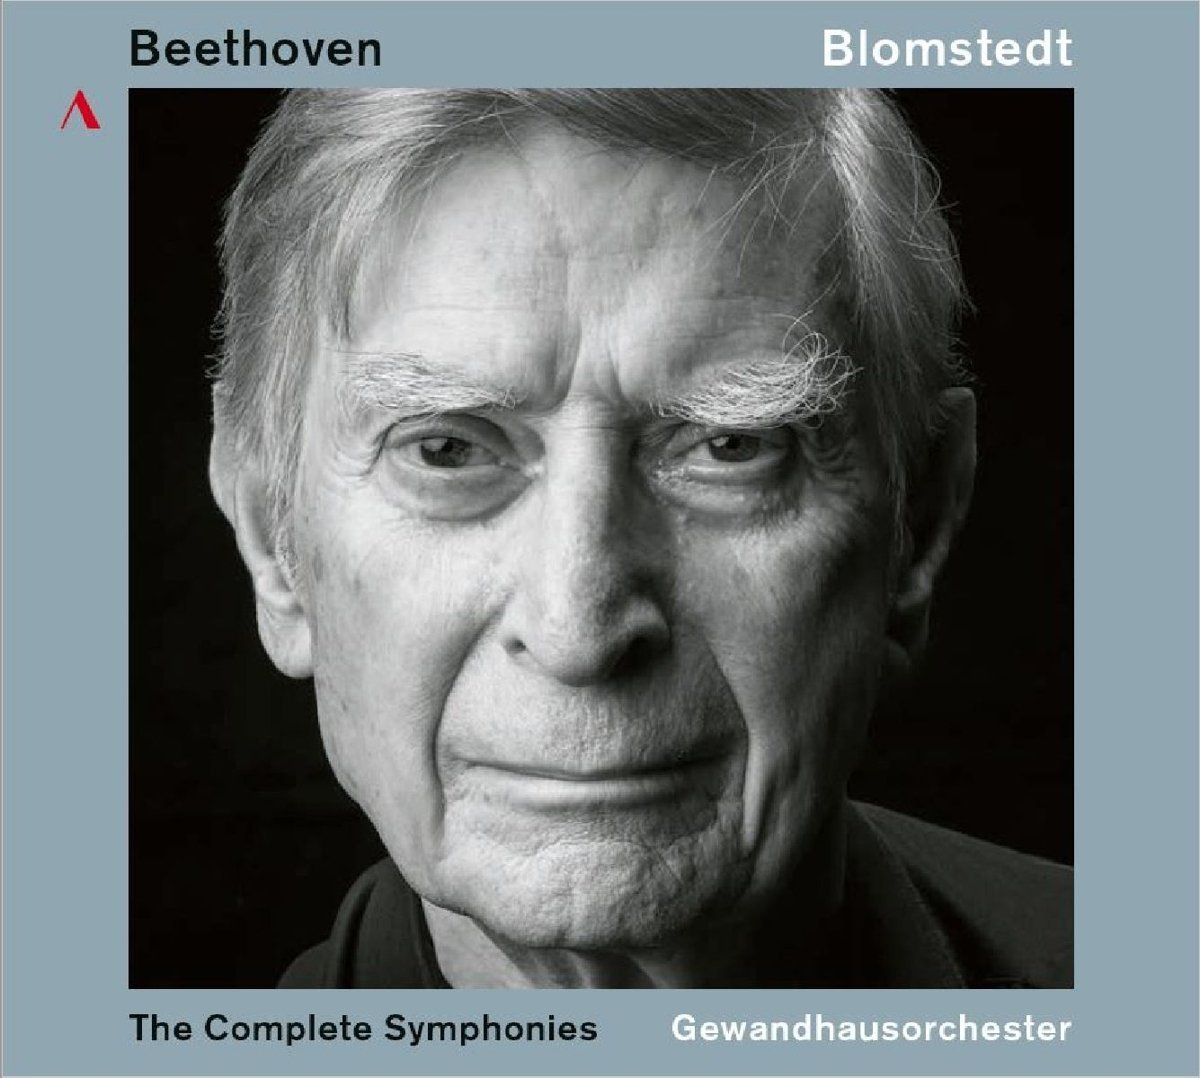 Blomstedt's Beethoven